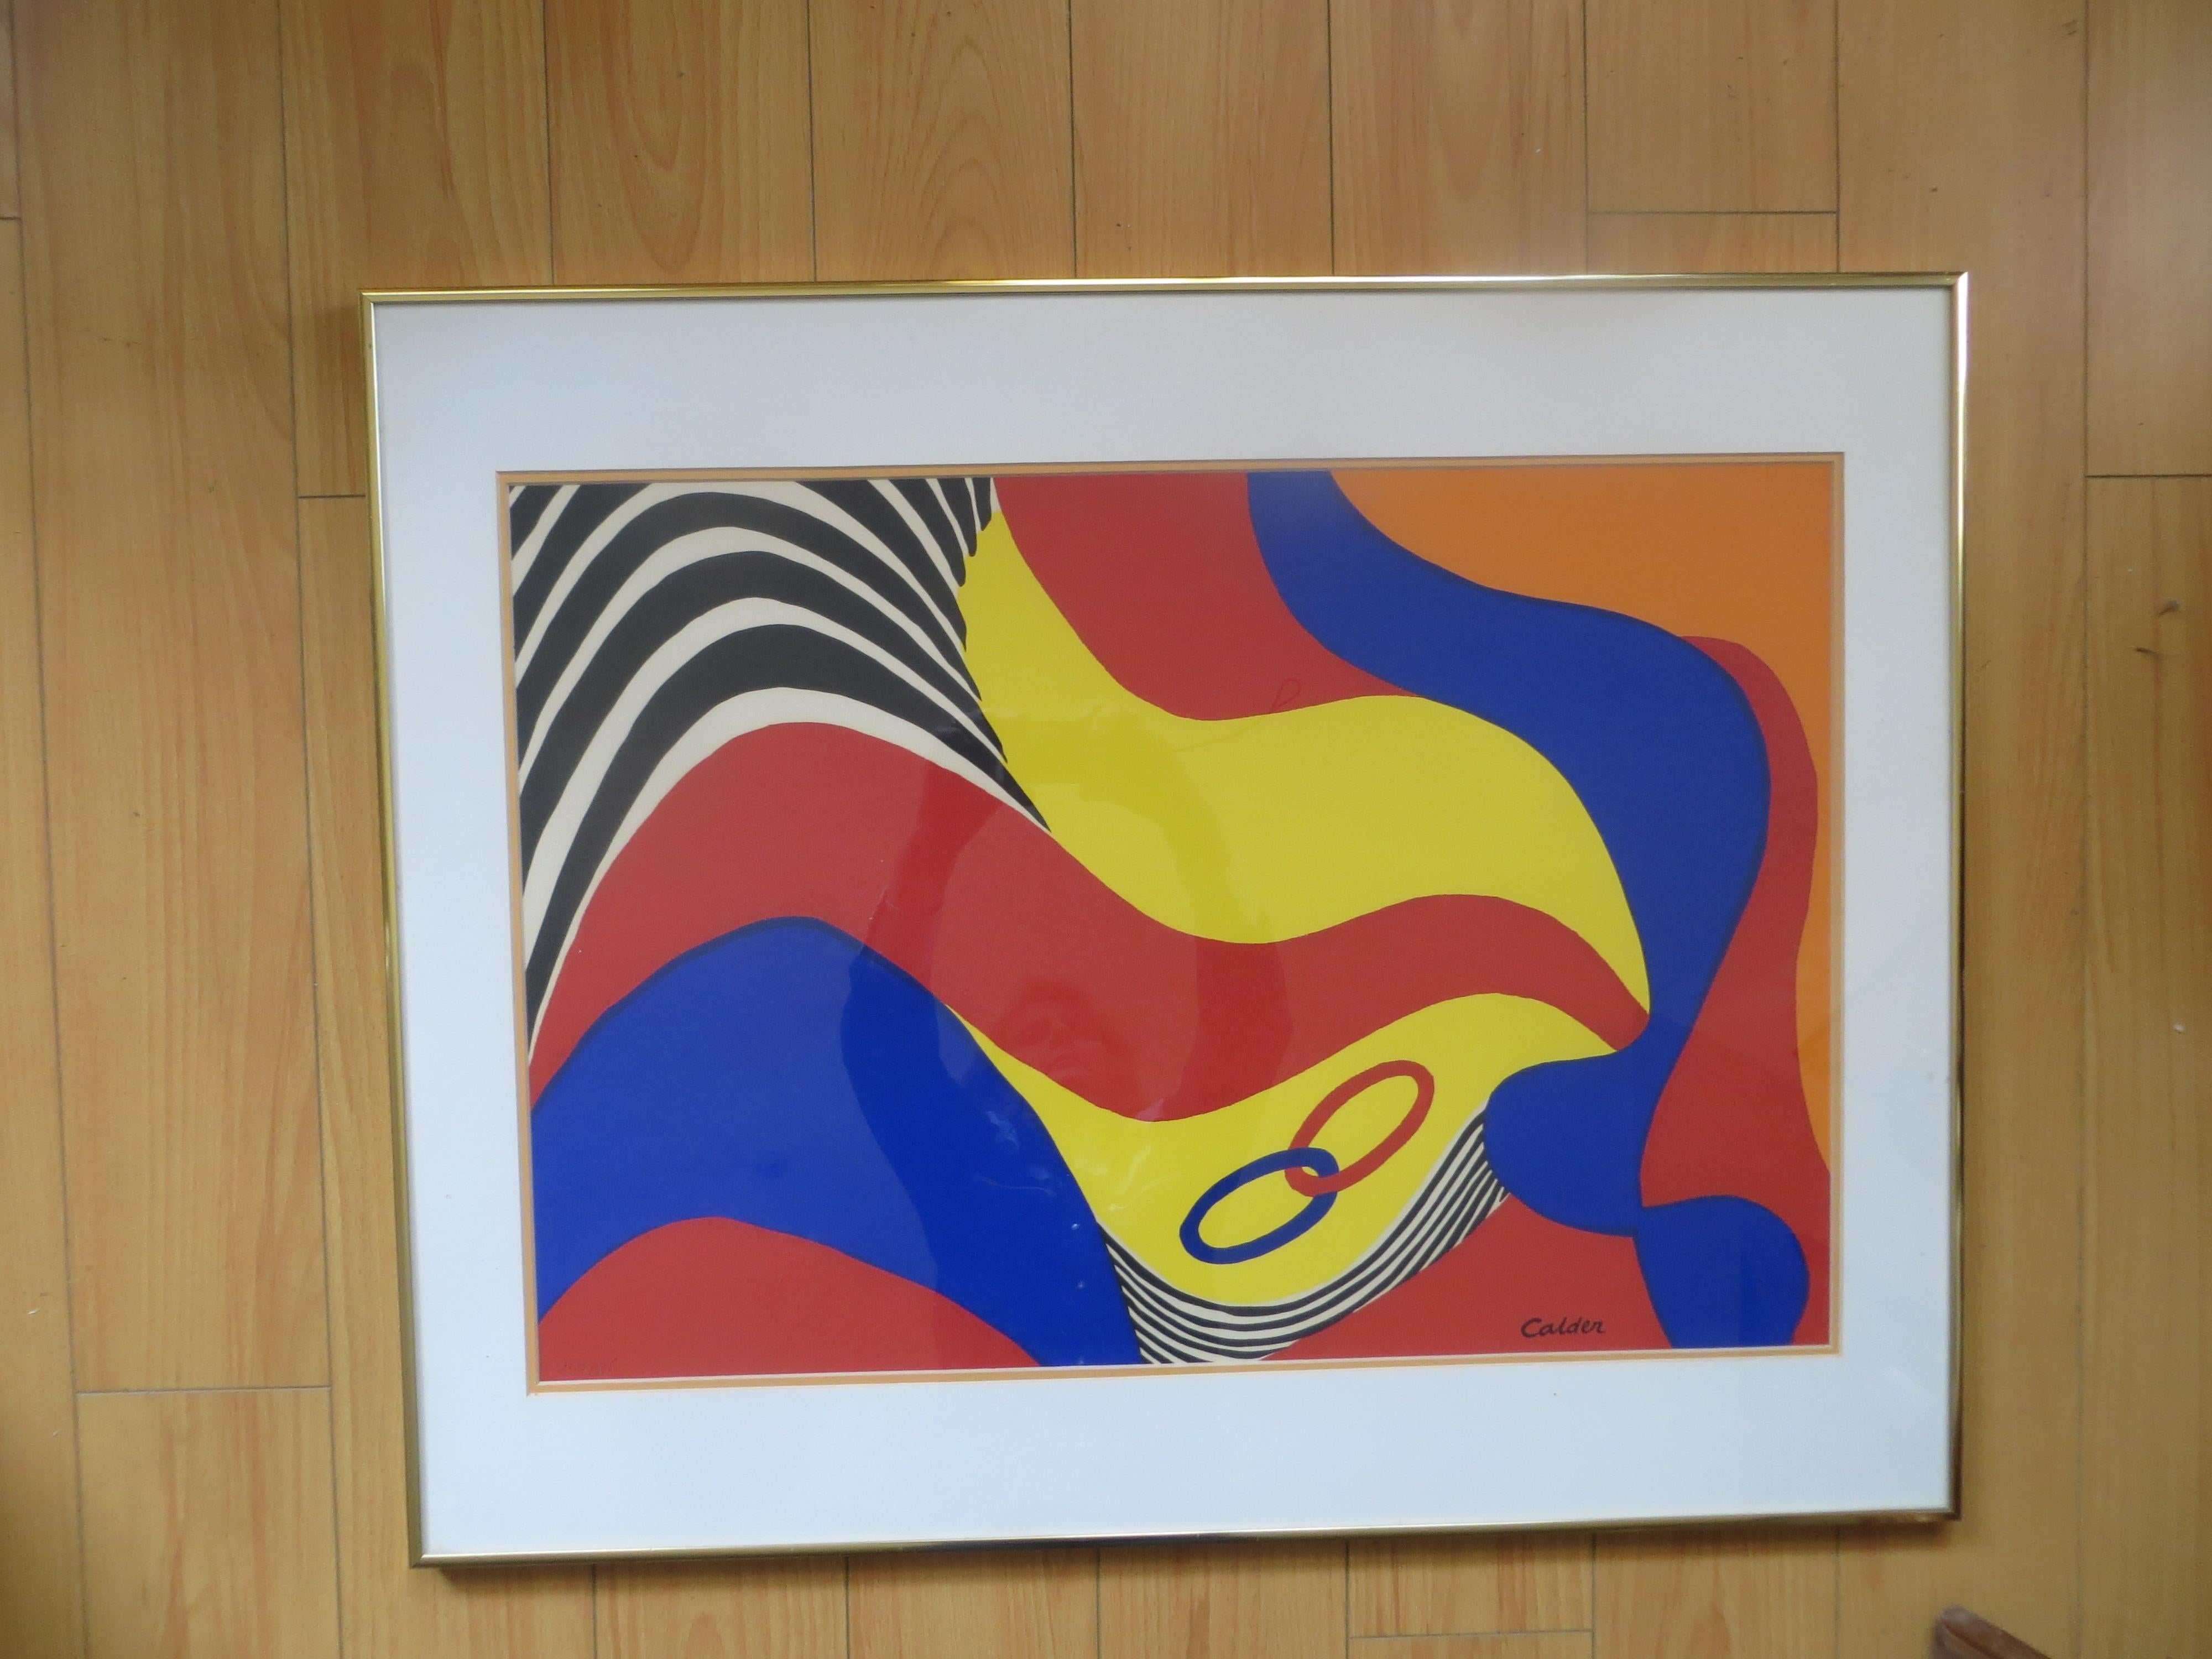  CalderAbstract lithograph Flying colors 1975 limitierte Auflage  – Print von Alexander Calder